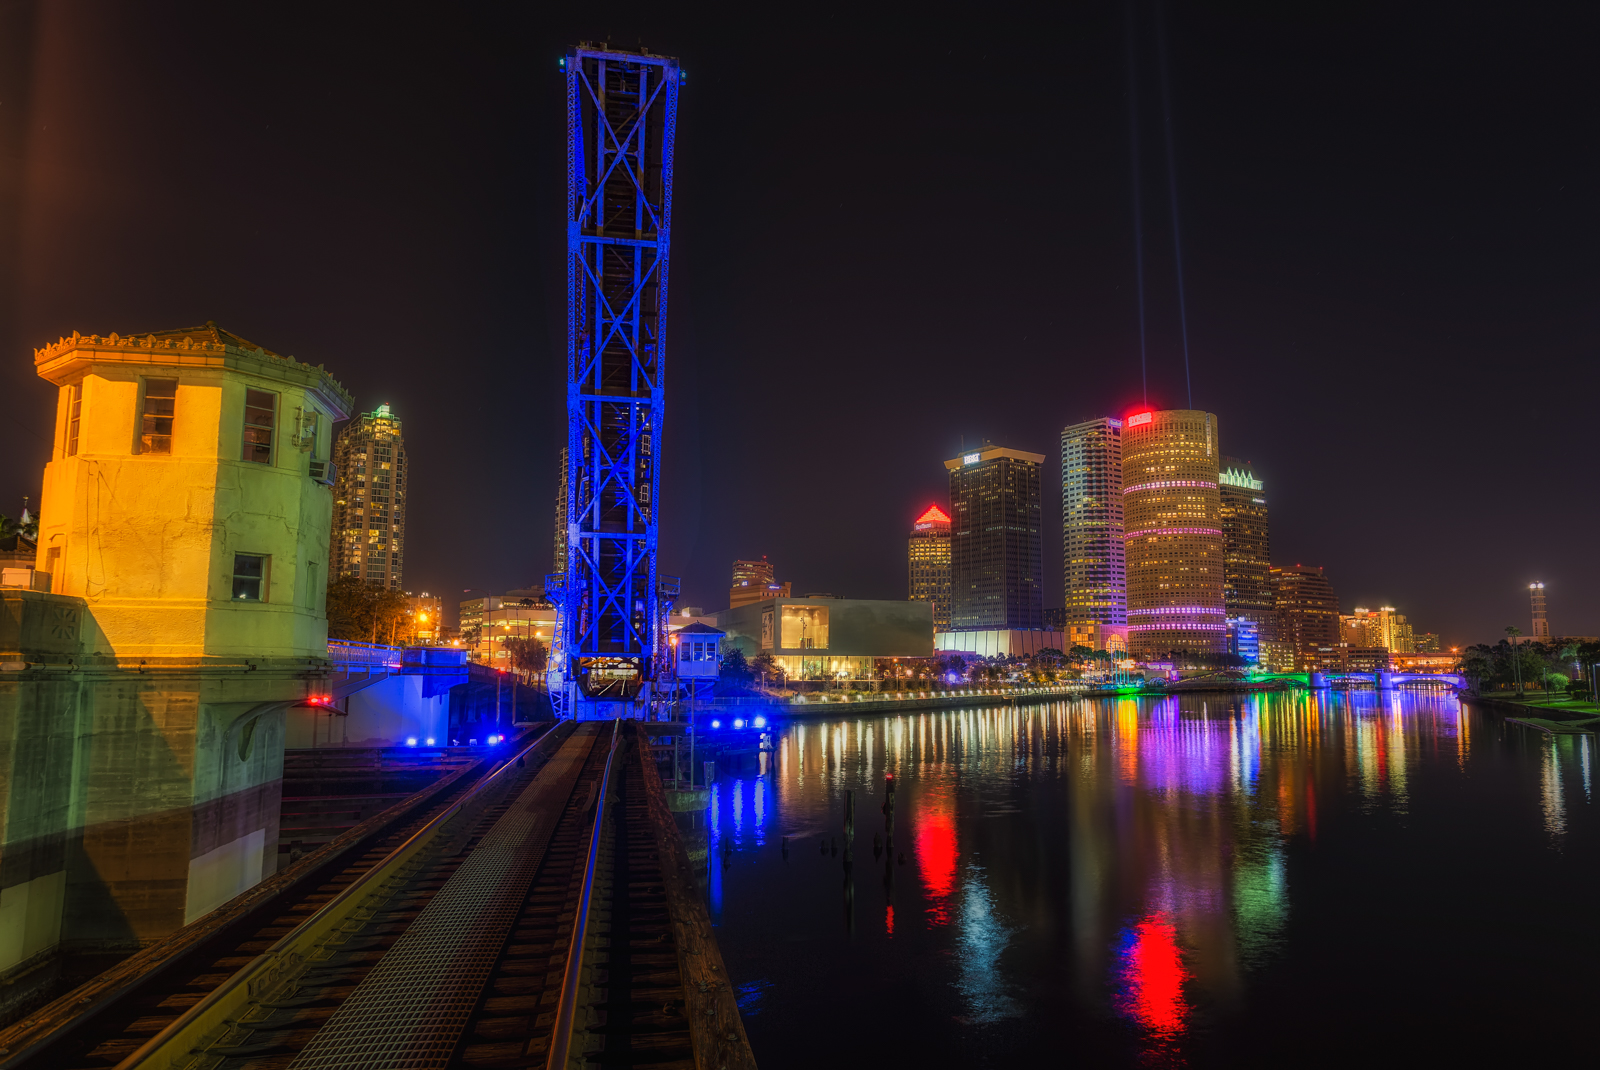 Cass St Rail Bridge and Lights on Tampa, Tampa, Florida